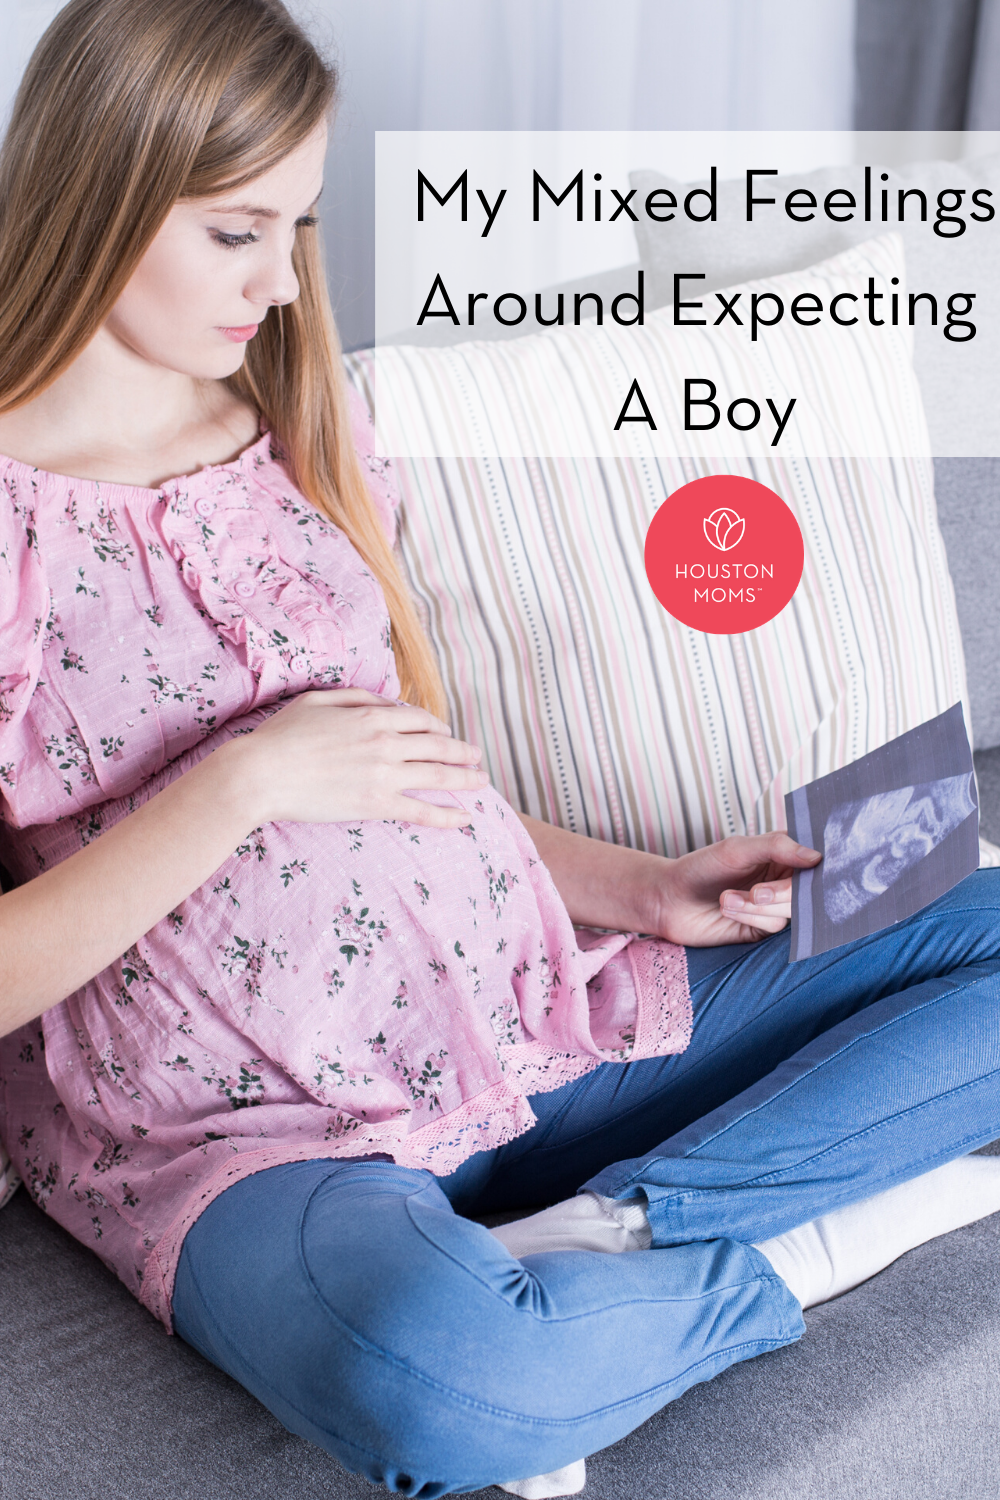 Houston Moms "My Mixed Feelings Around Expecting a Boy" #houstonmoms #houstonmomsblog #momsaroundhouston